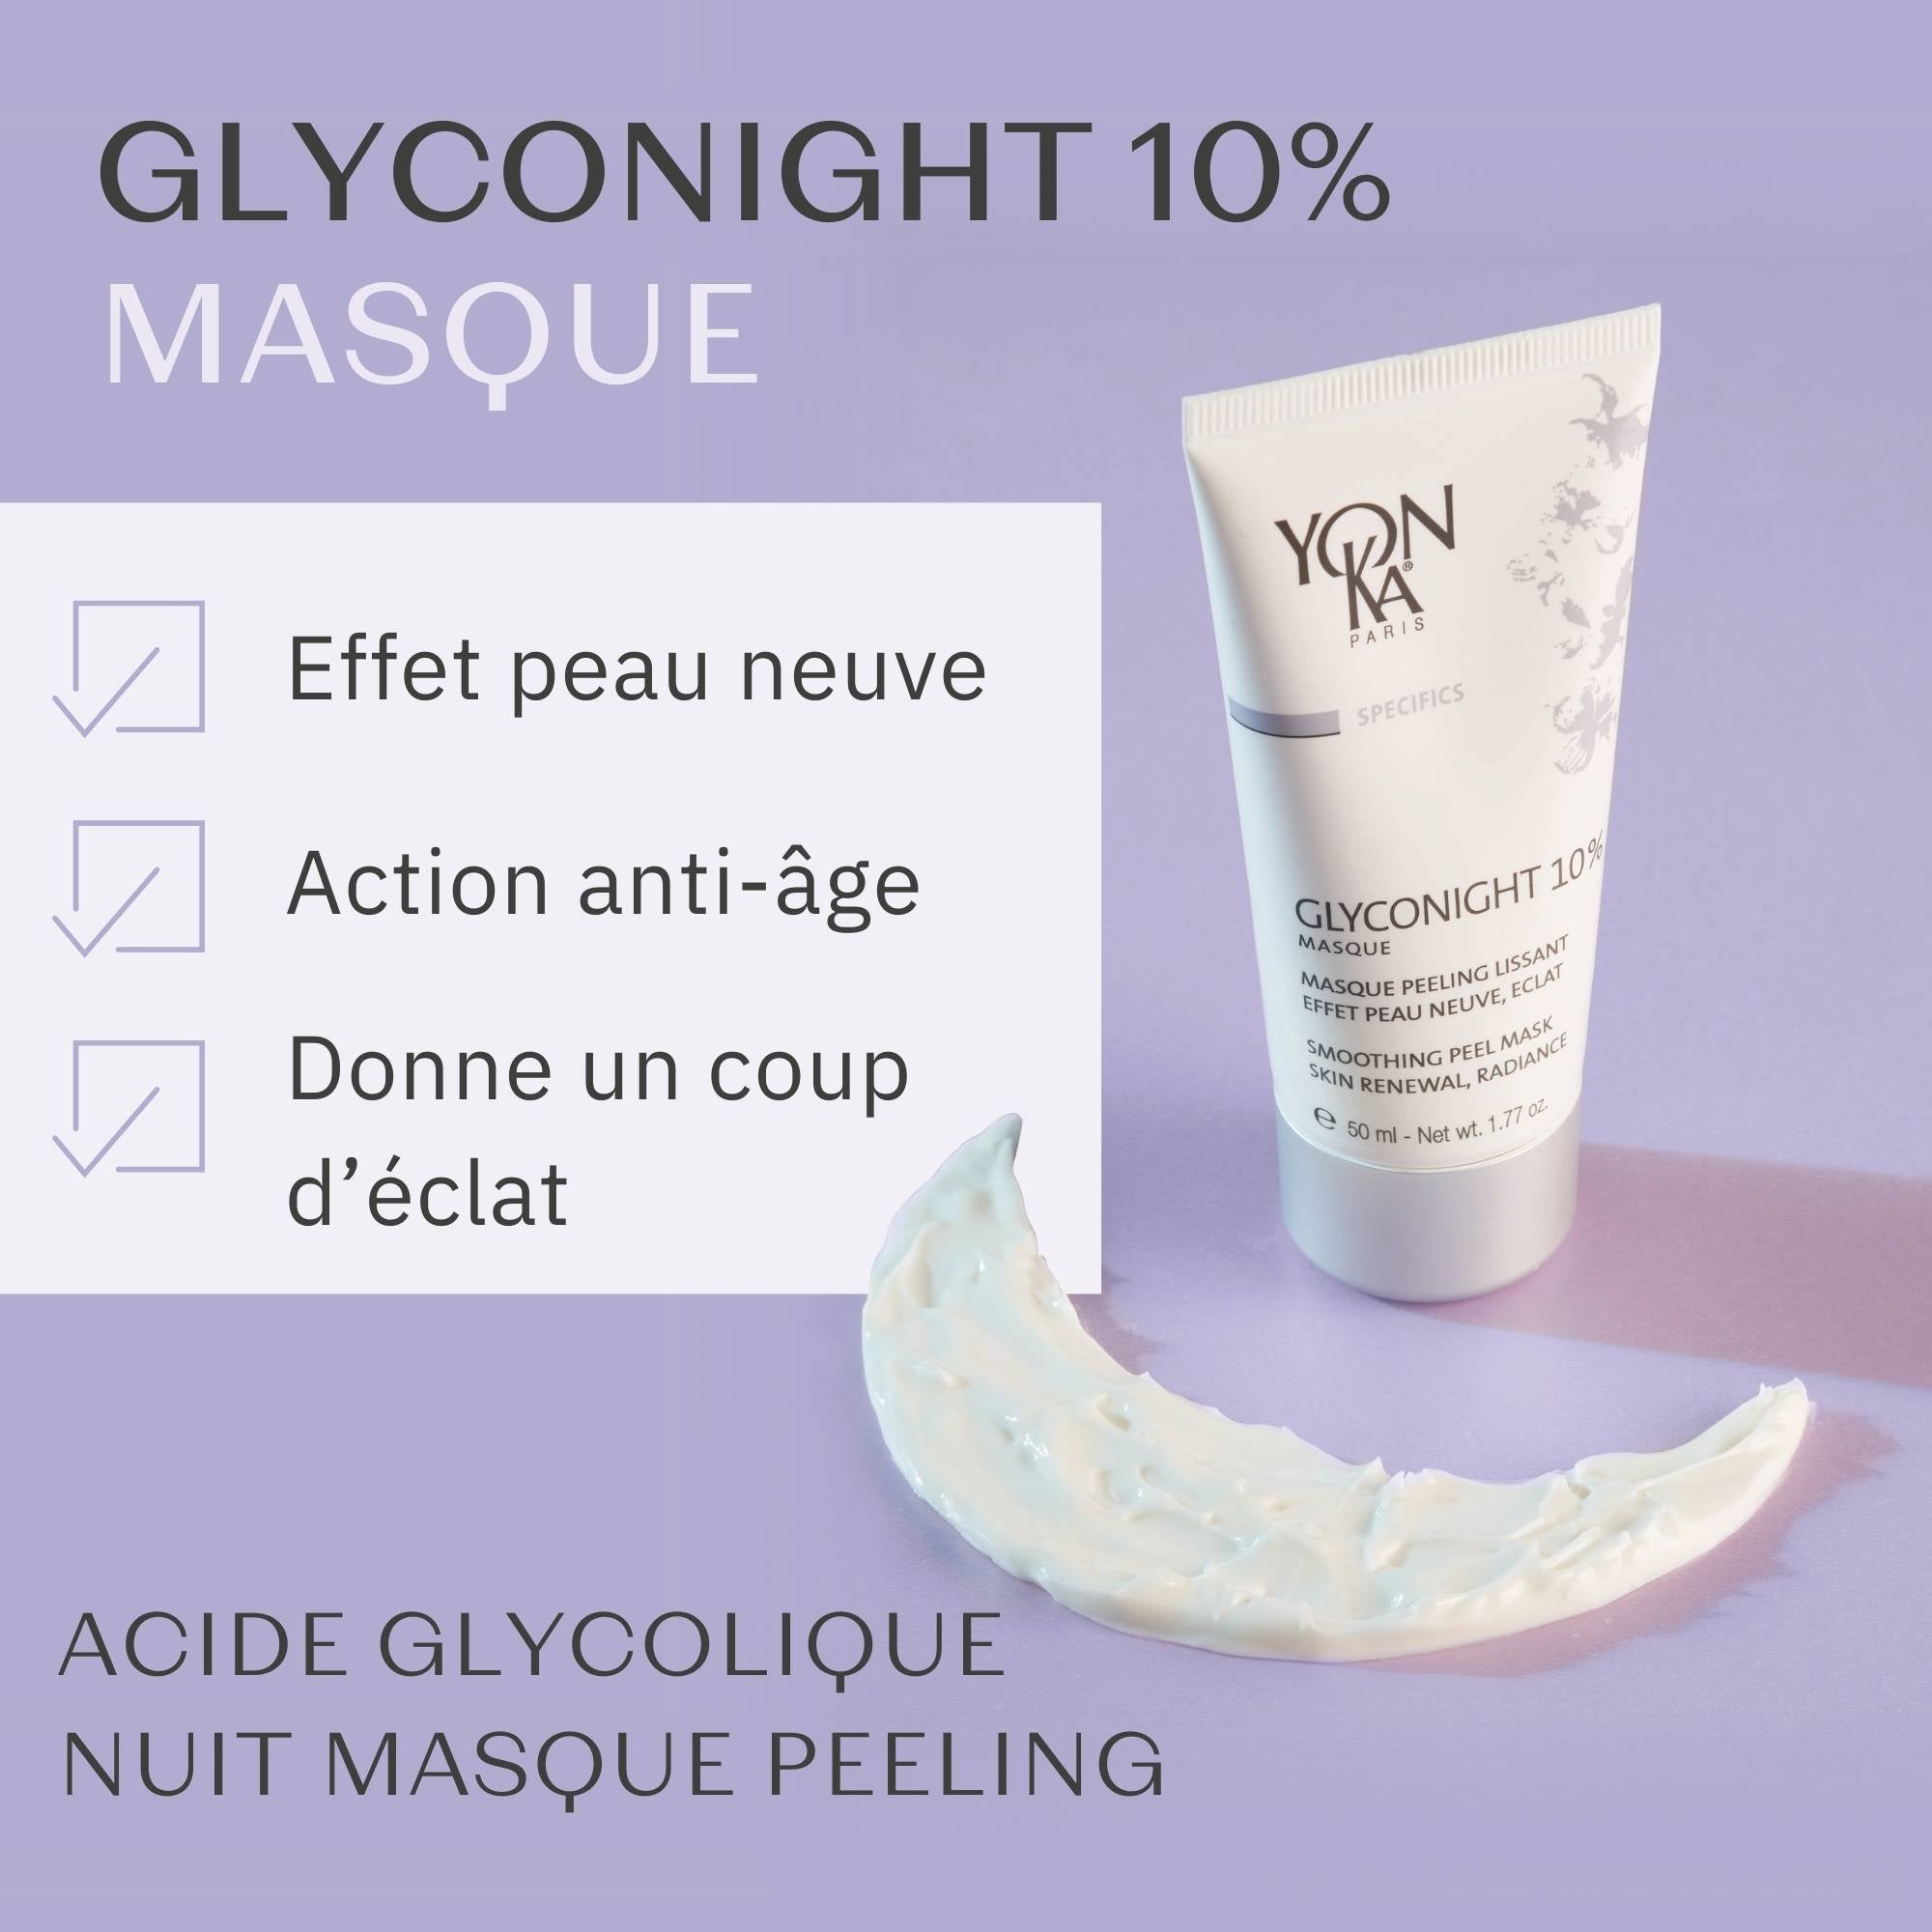 Glyconight 10% Masque 15ml